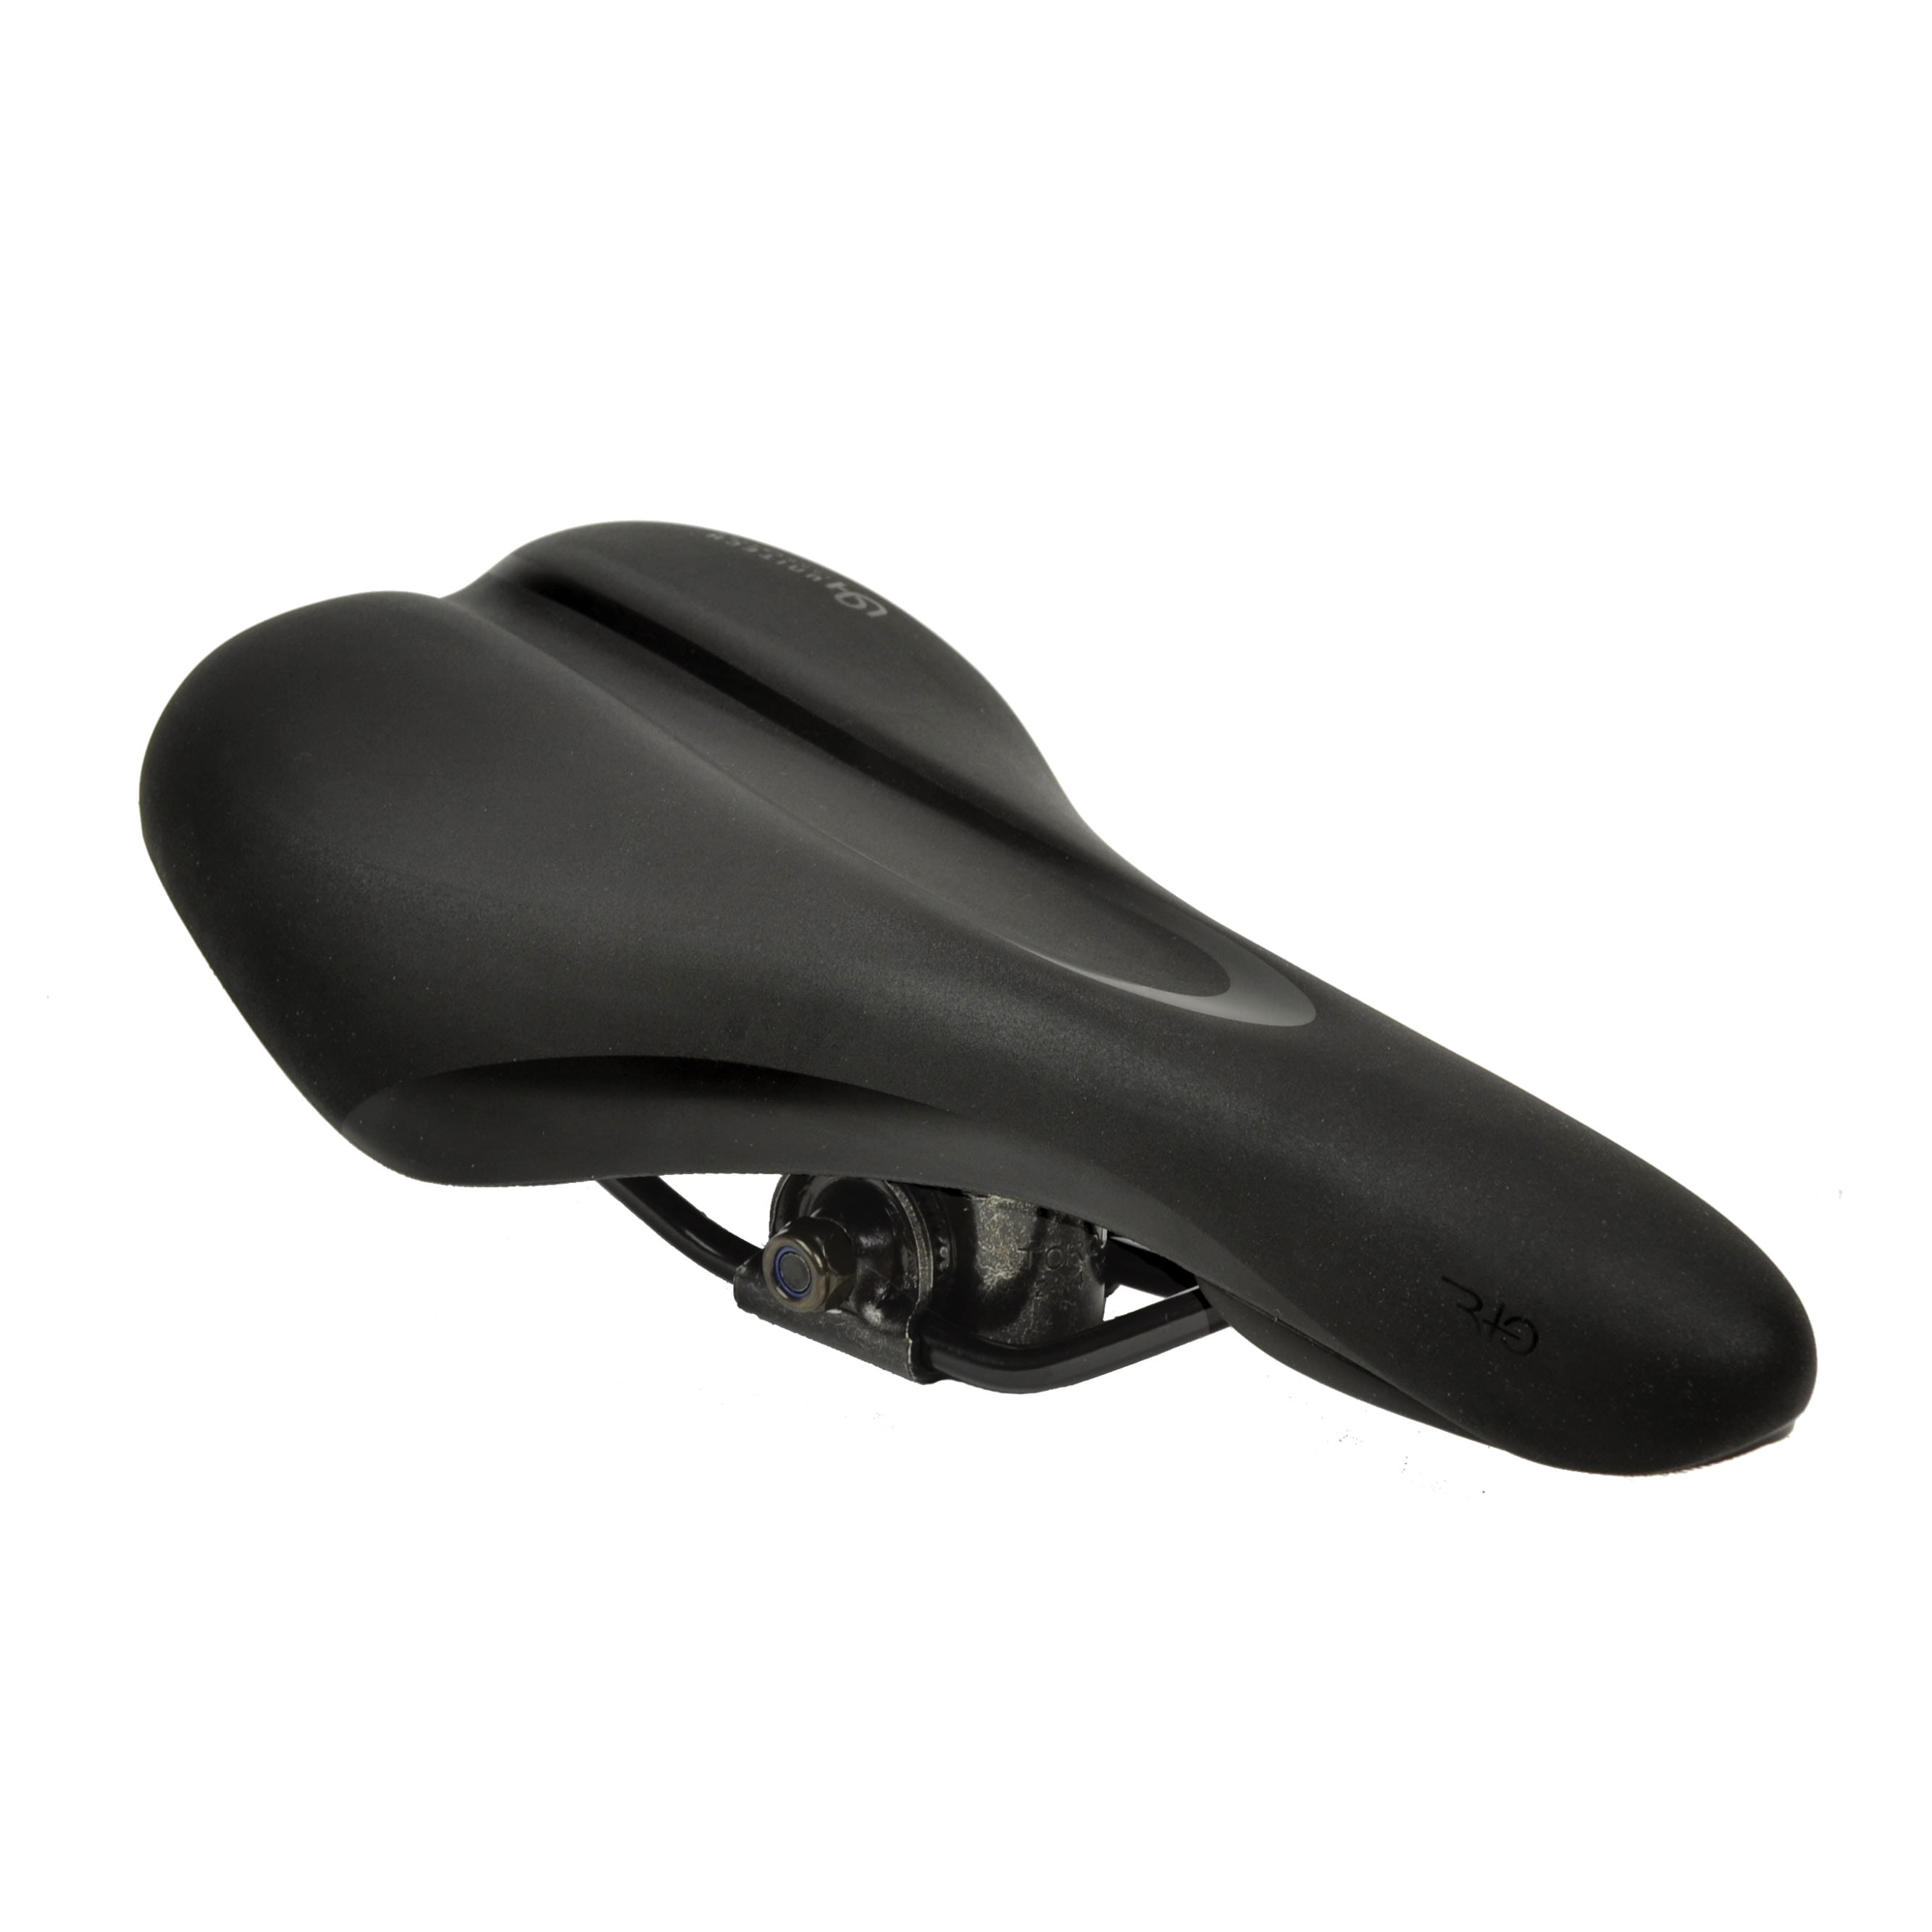 New Ergon SMC4-L Bike Saddle Black Large Bicycle Seat 